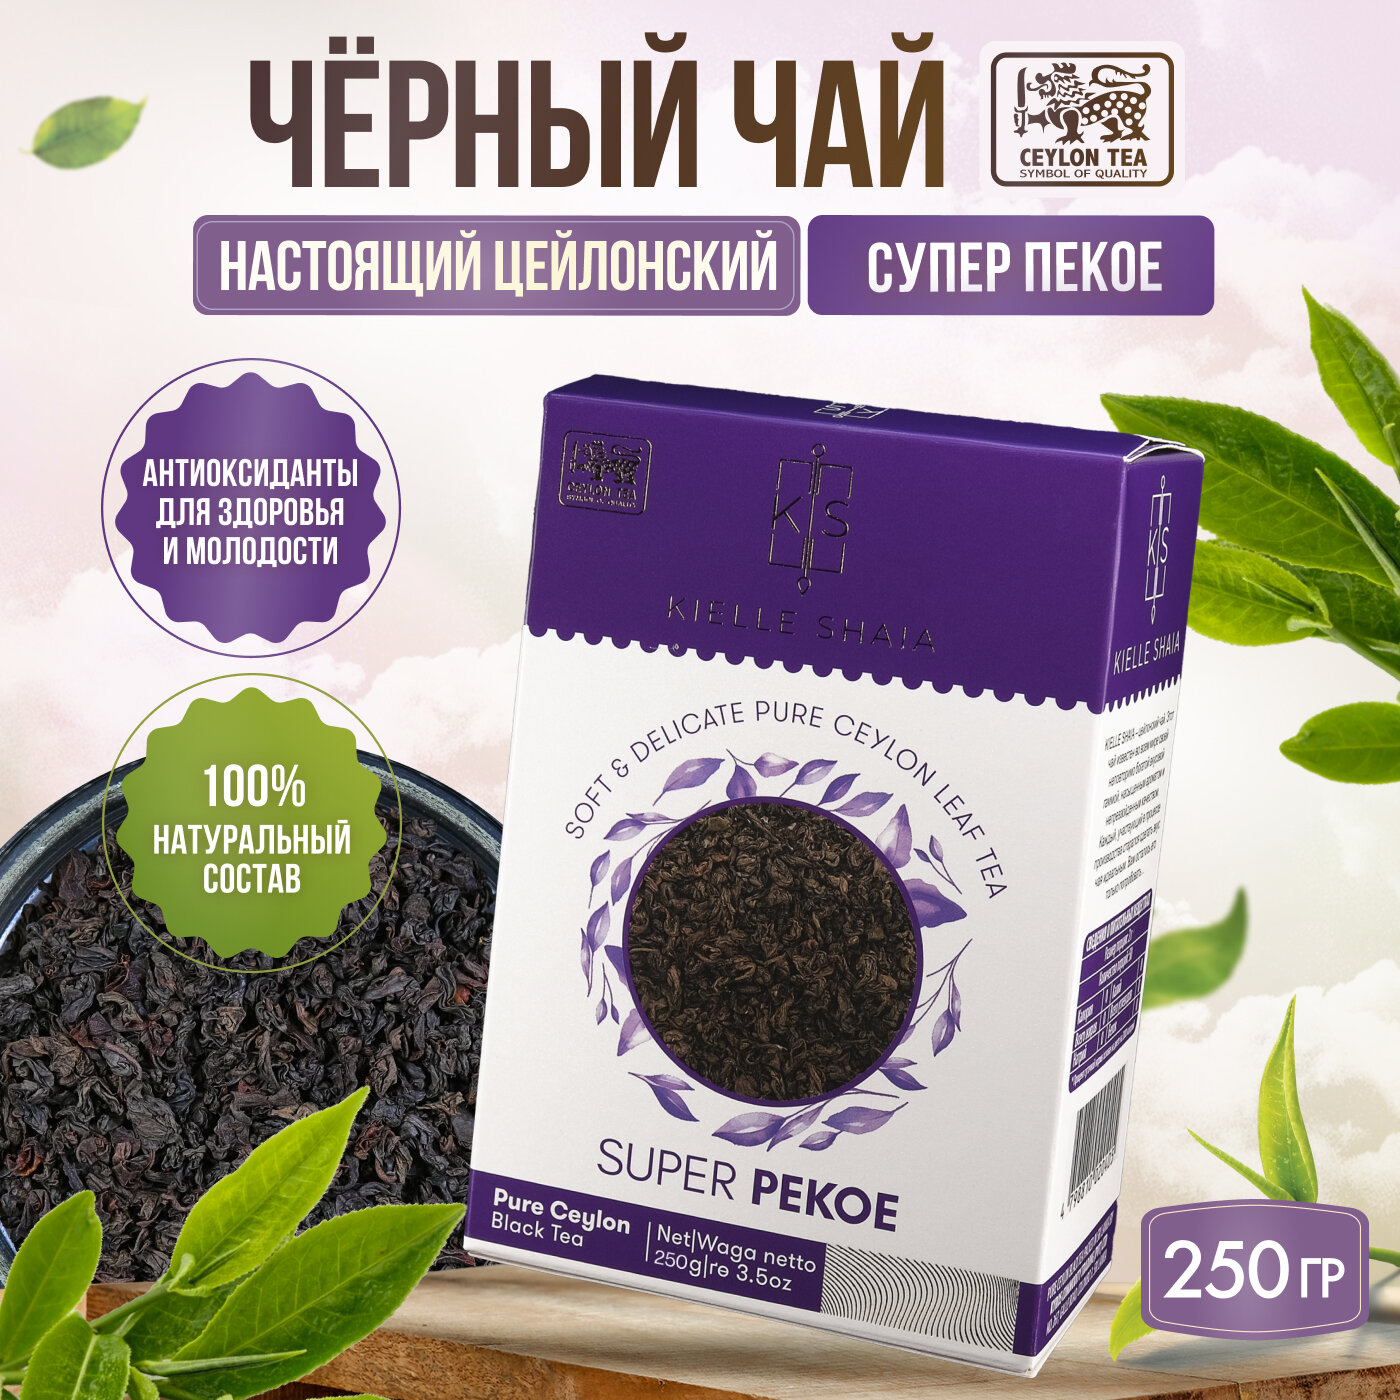 Чай черный листовой цейлонский SUPER PEKOE KIELLE SHAIA, 250 г